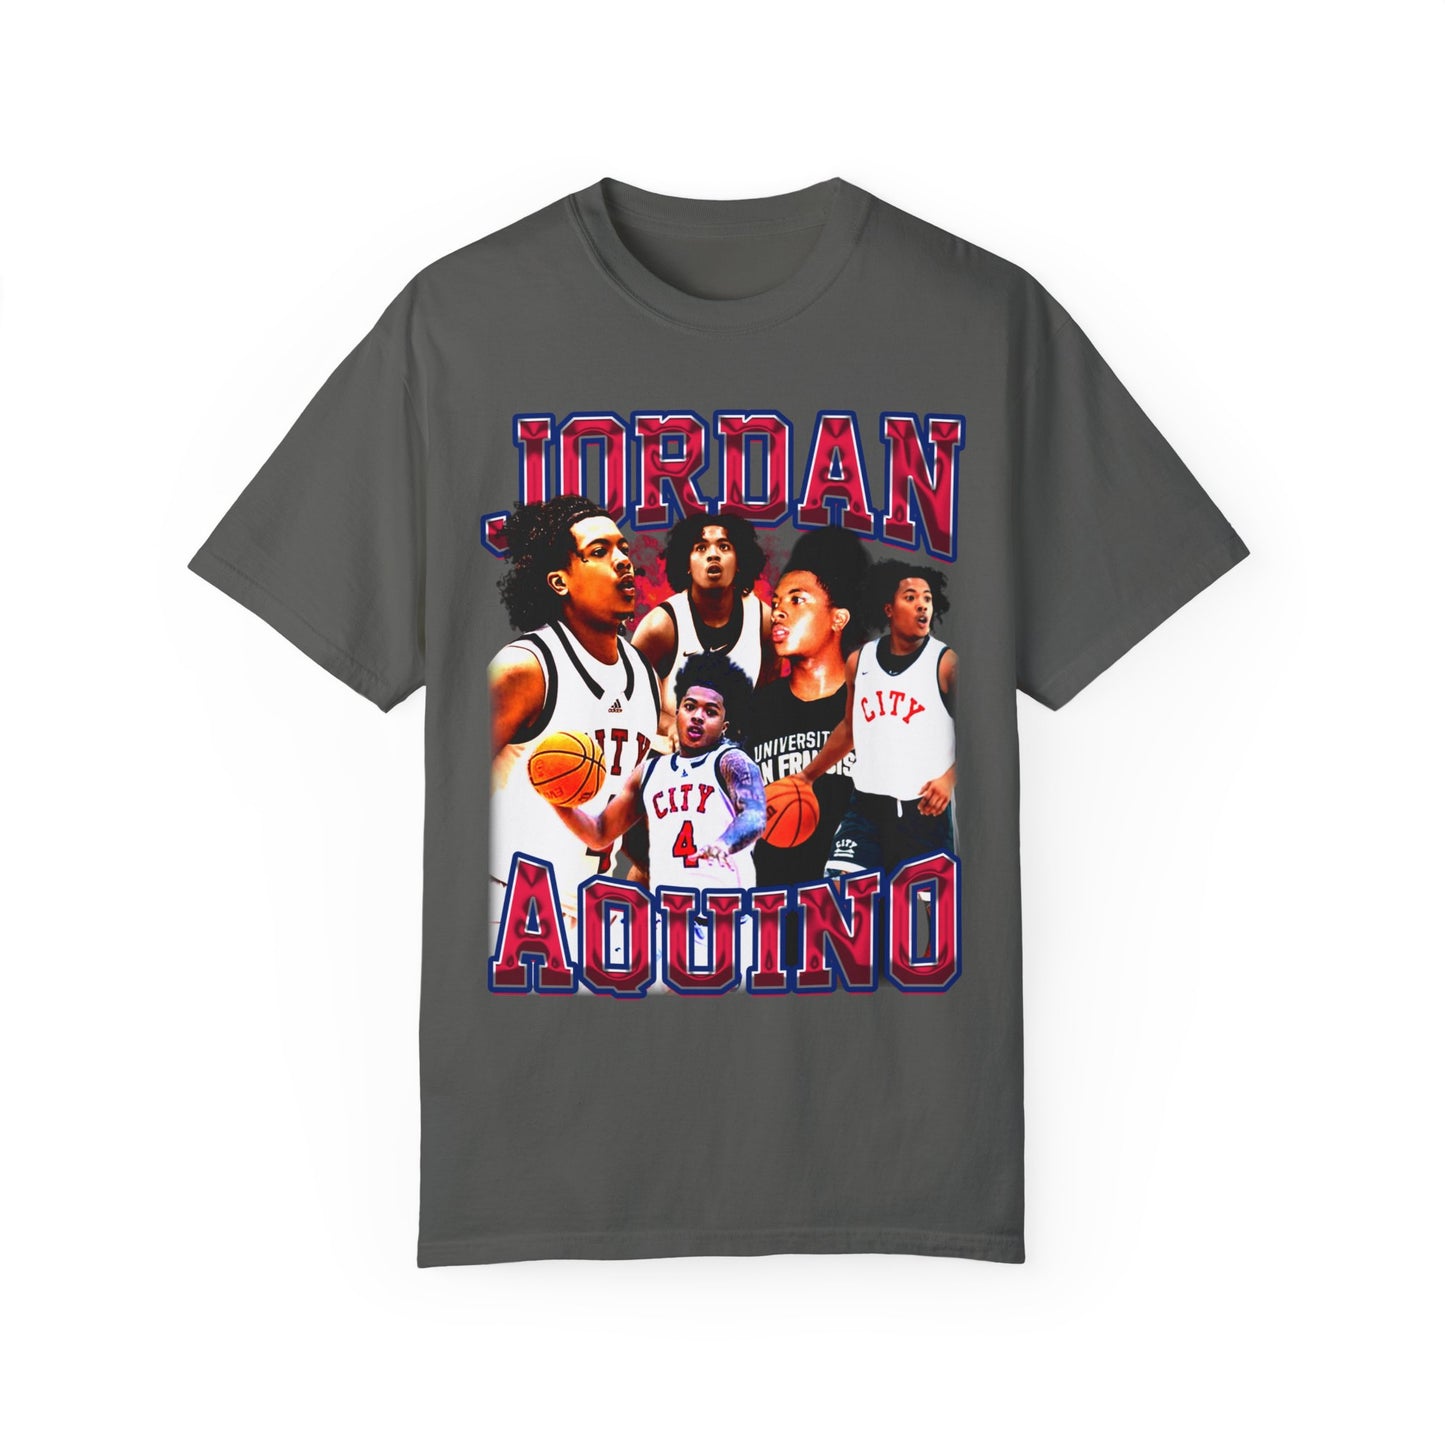 Jordan Aquino Graphic T-shirt